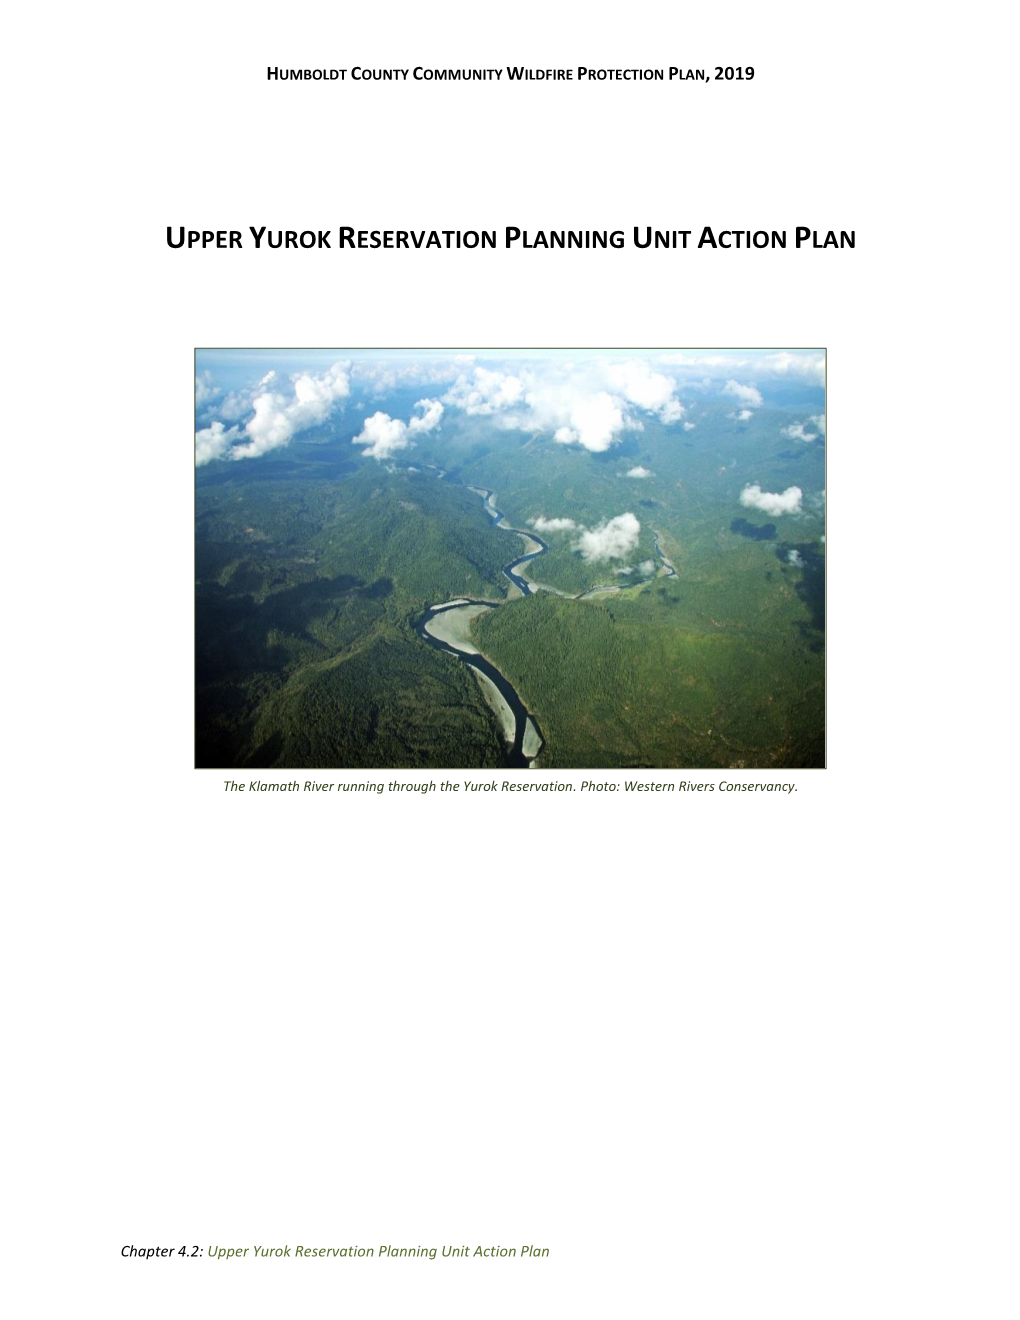 Upper Yurok Reservation Planning Unit Action Plan